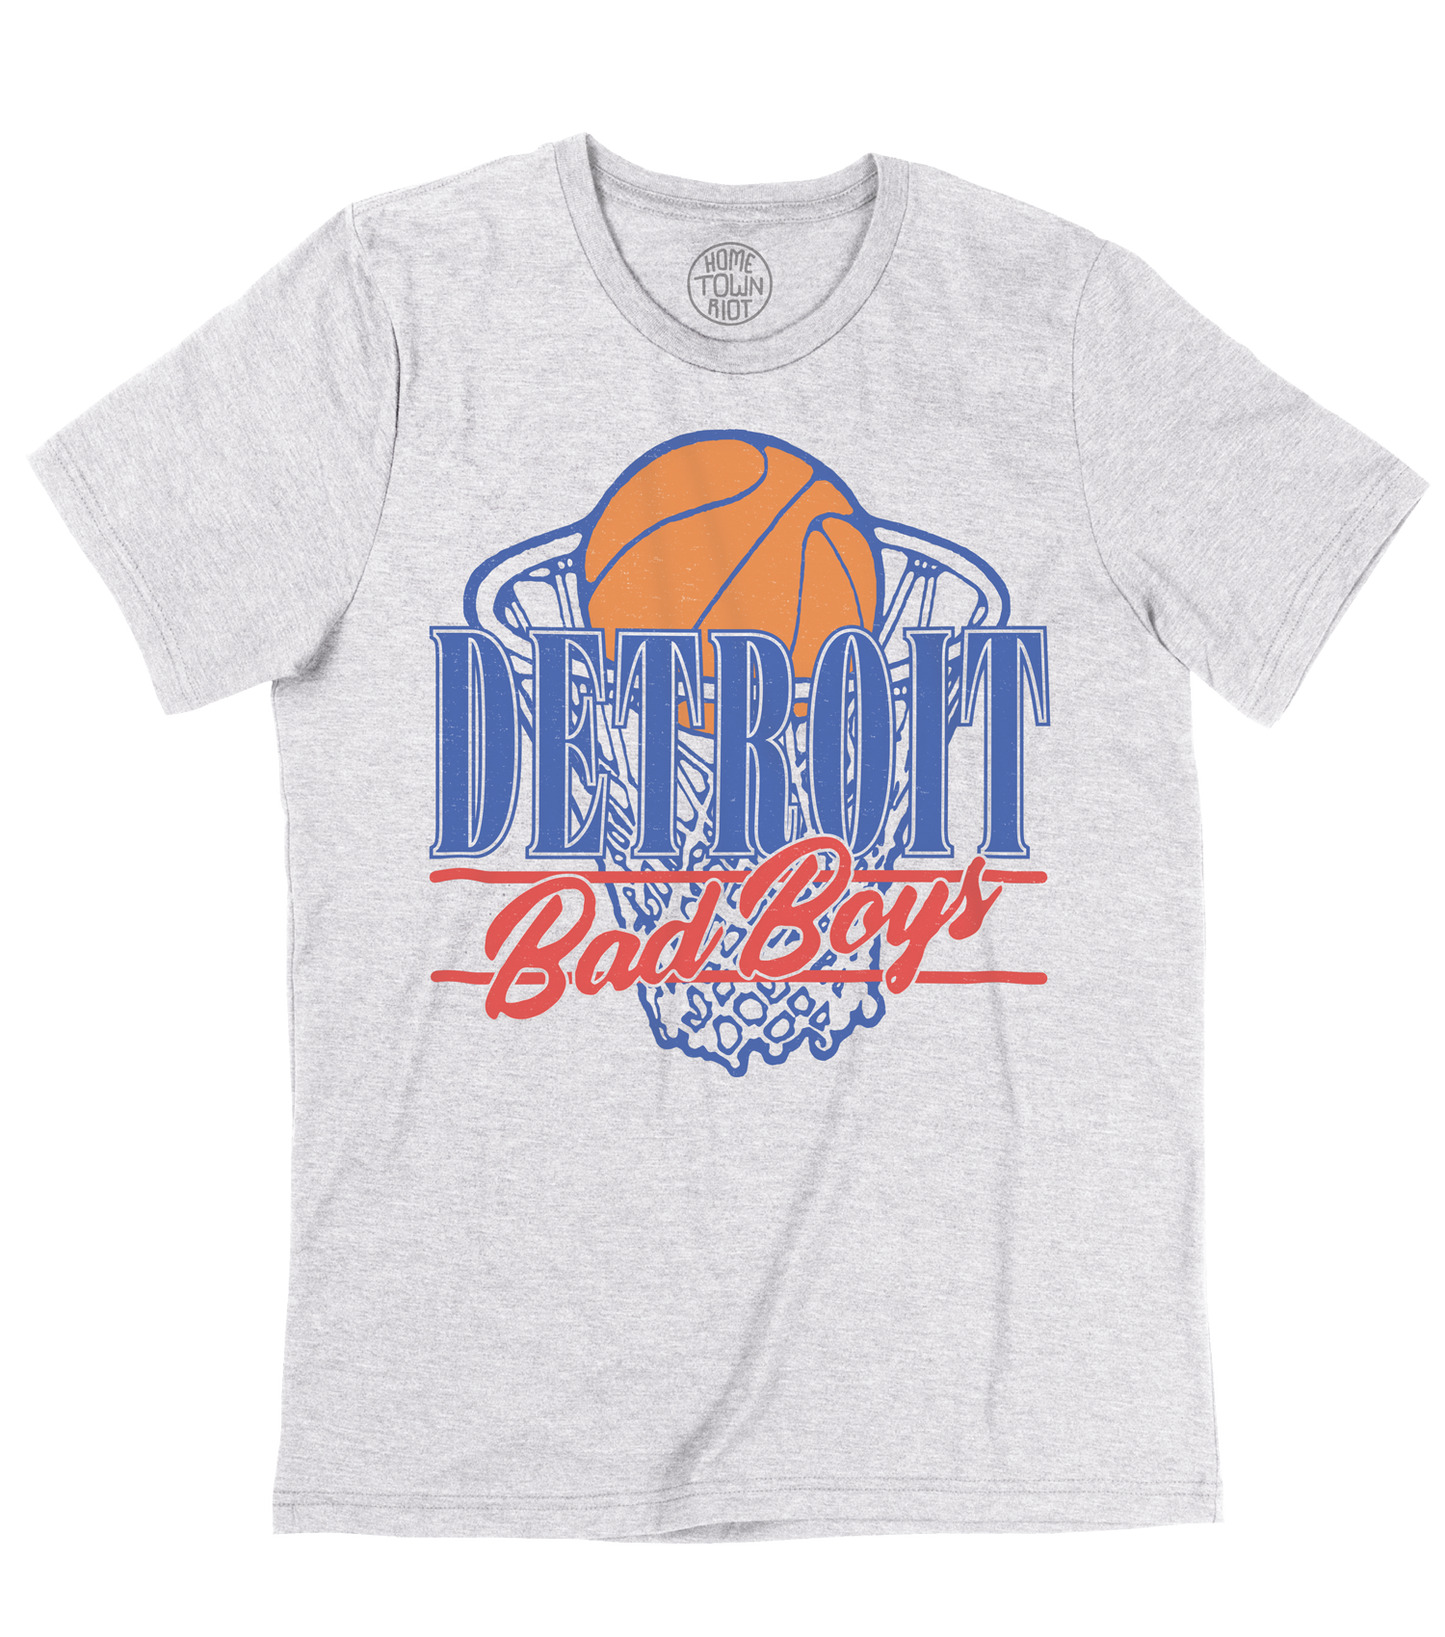 Detroit Basketball Bad Boys Shirt, vintage clothing